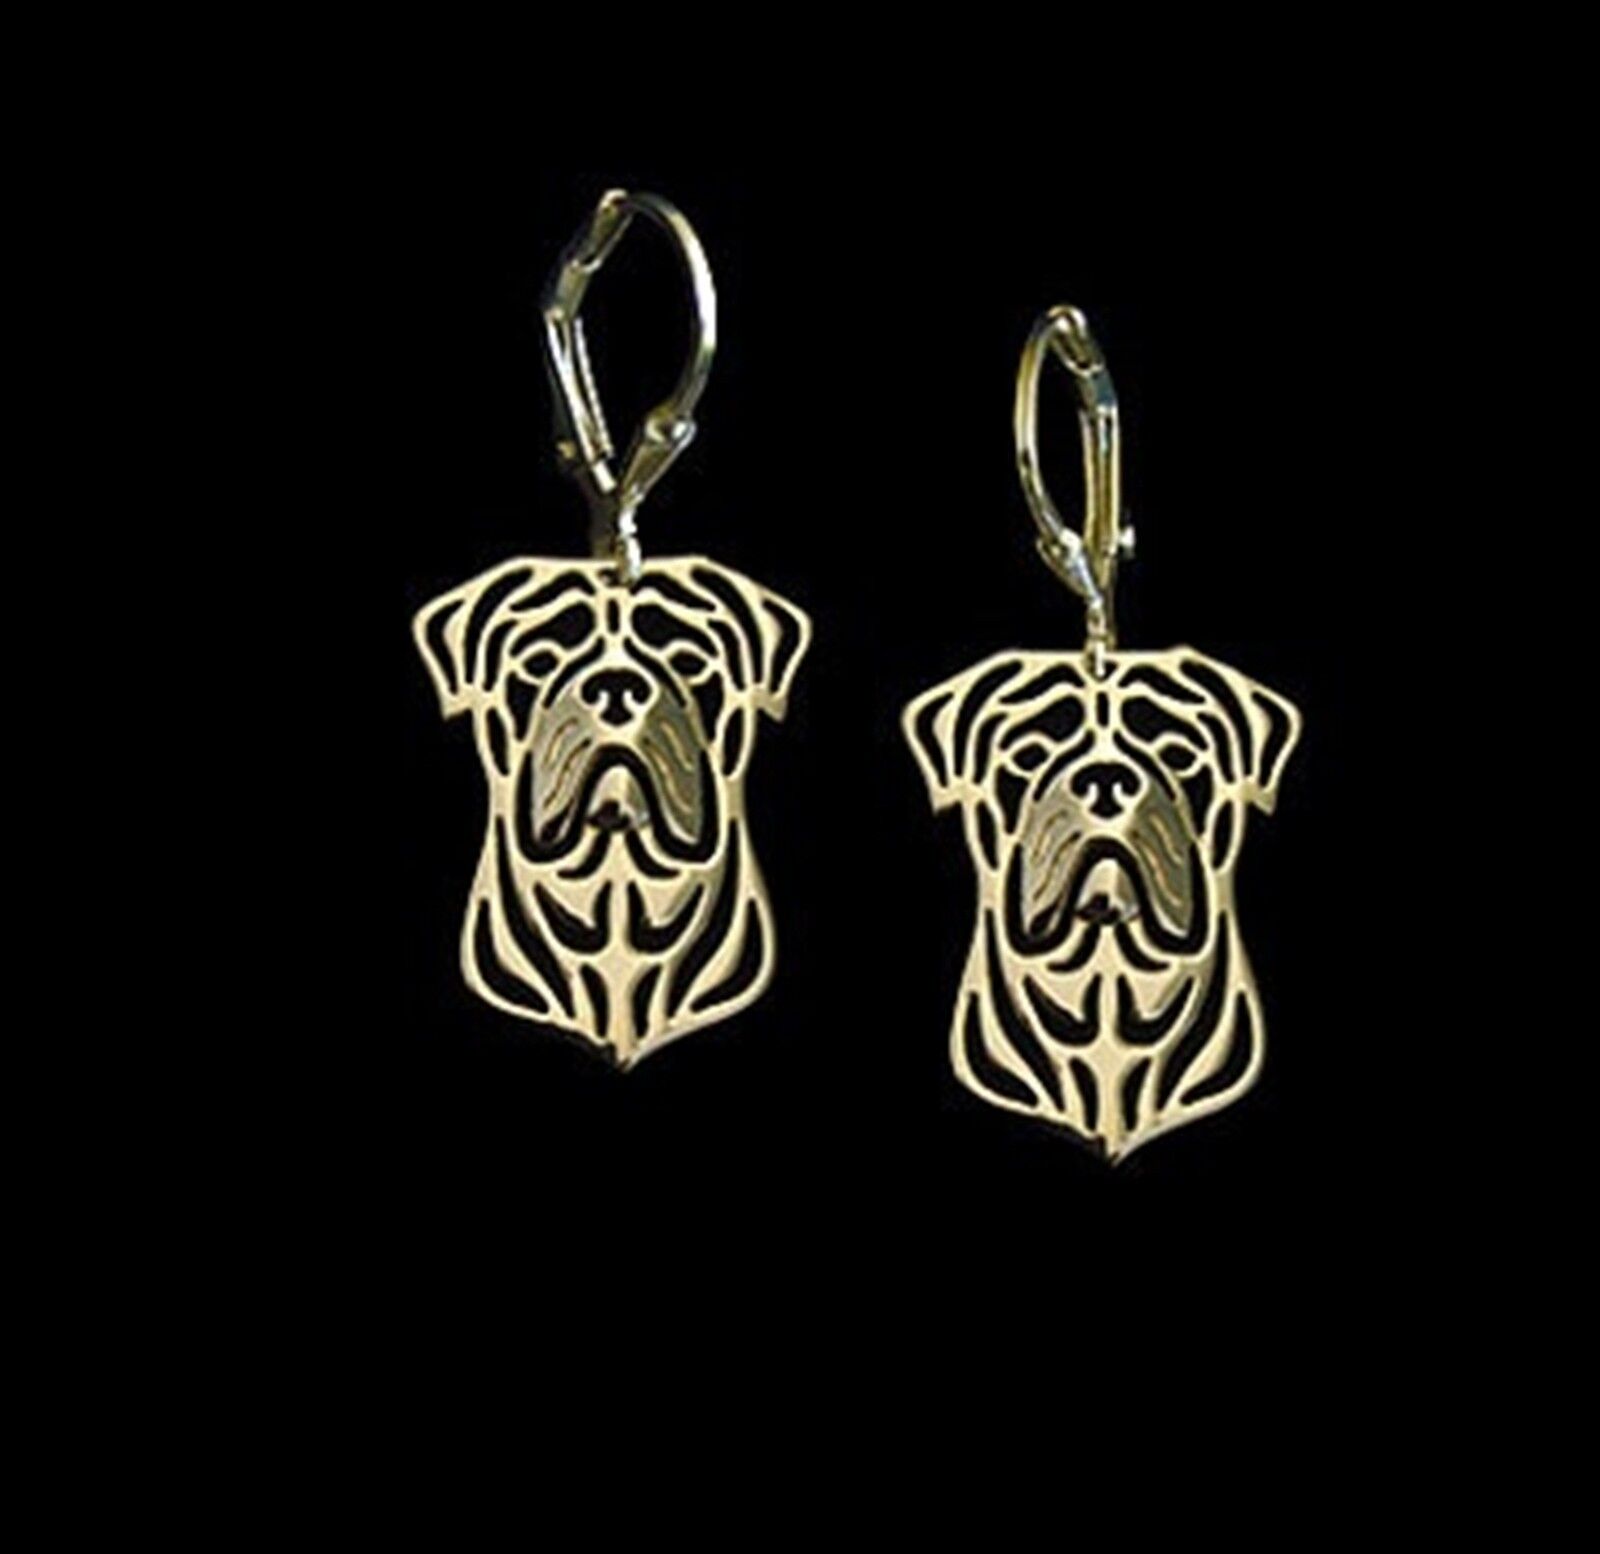 Bull Mastiff Dog Earrings-Fashion Jewellery Gold Plated, Leverback Hook